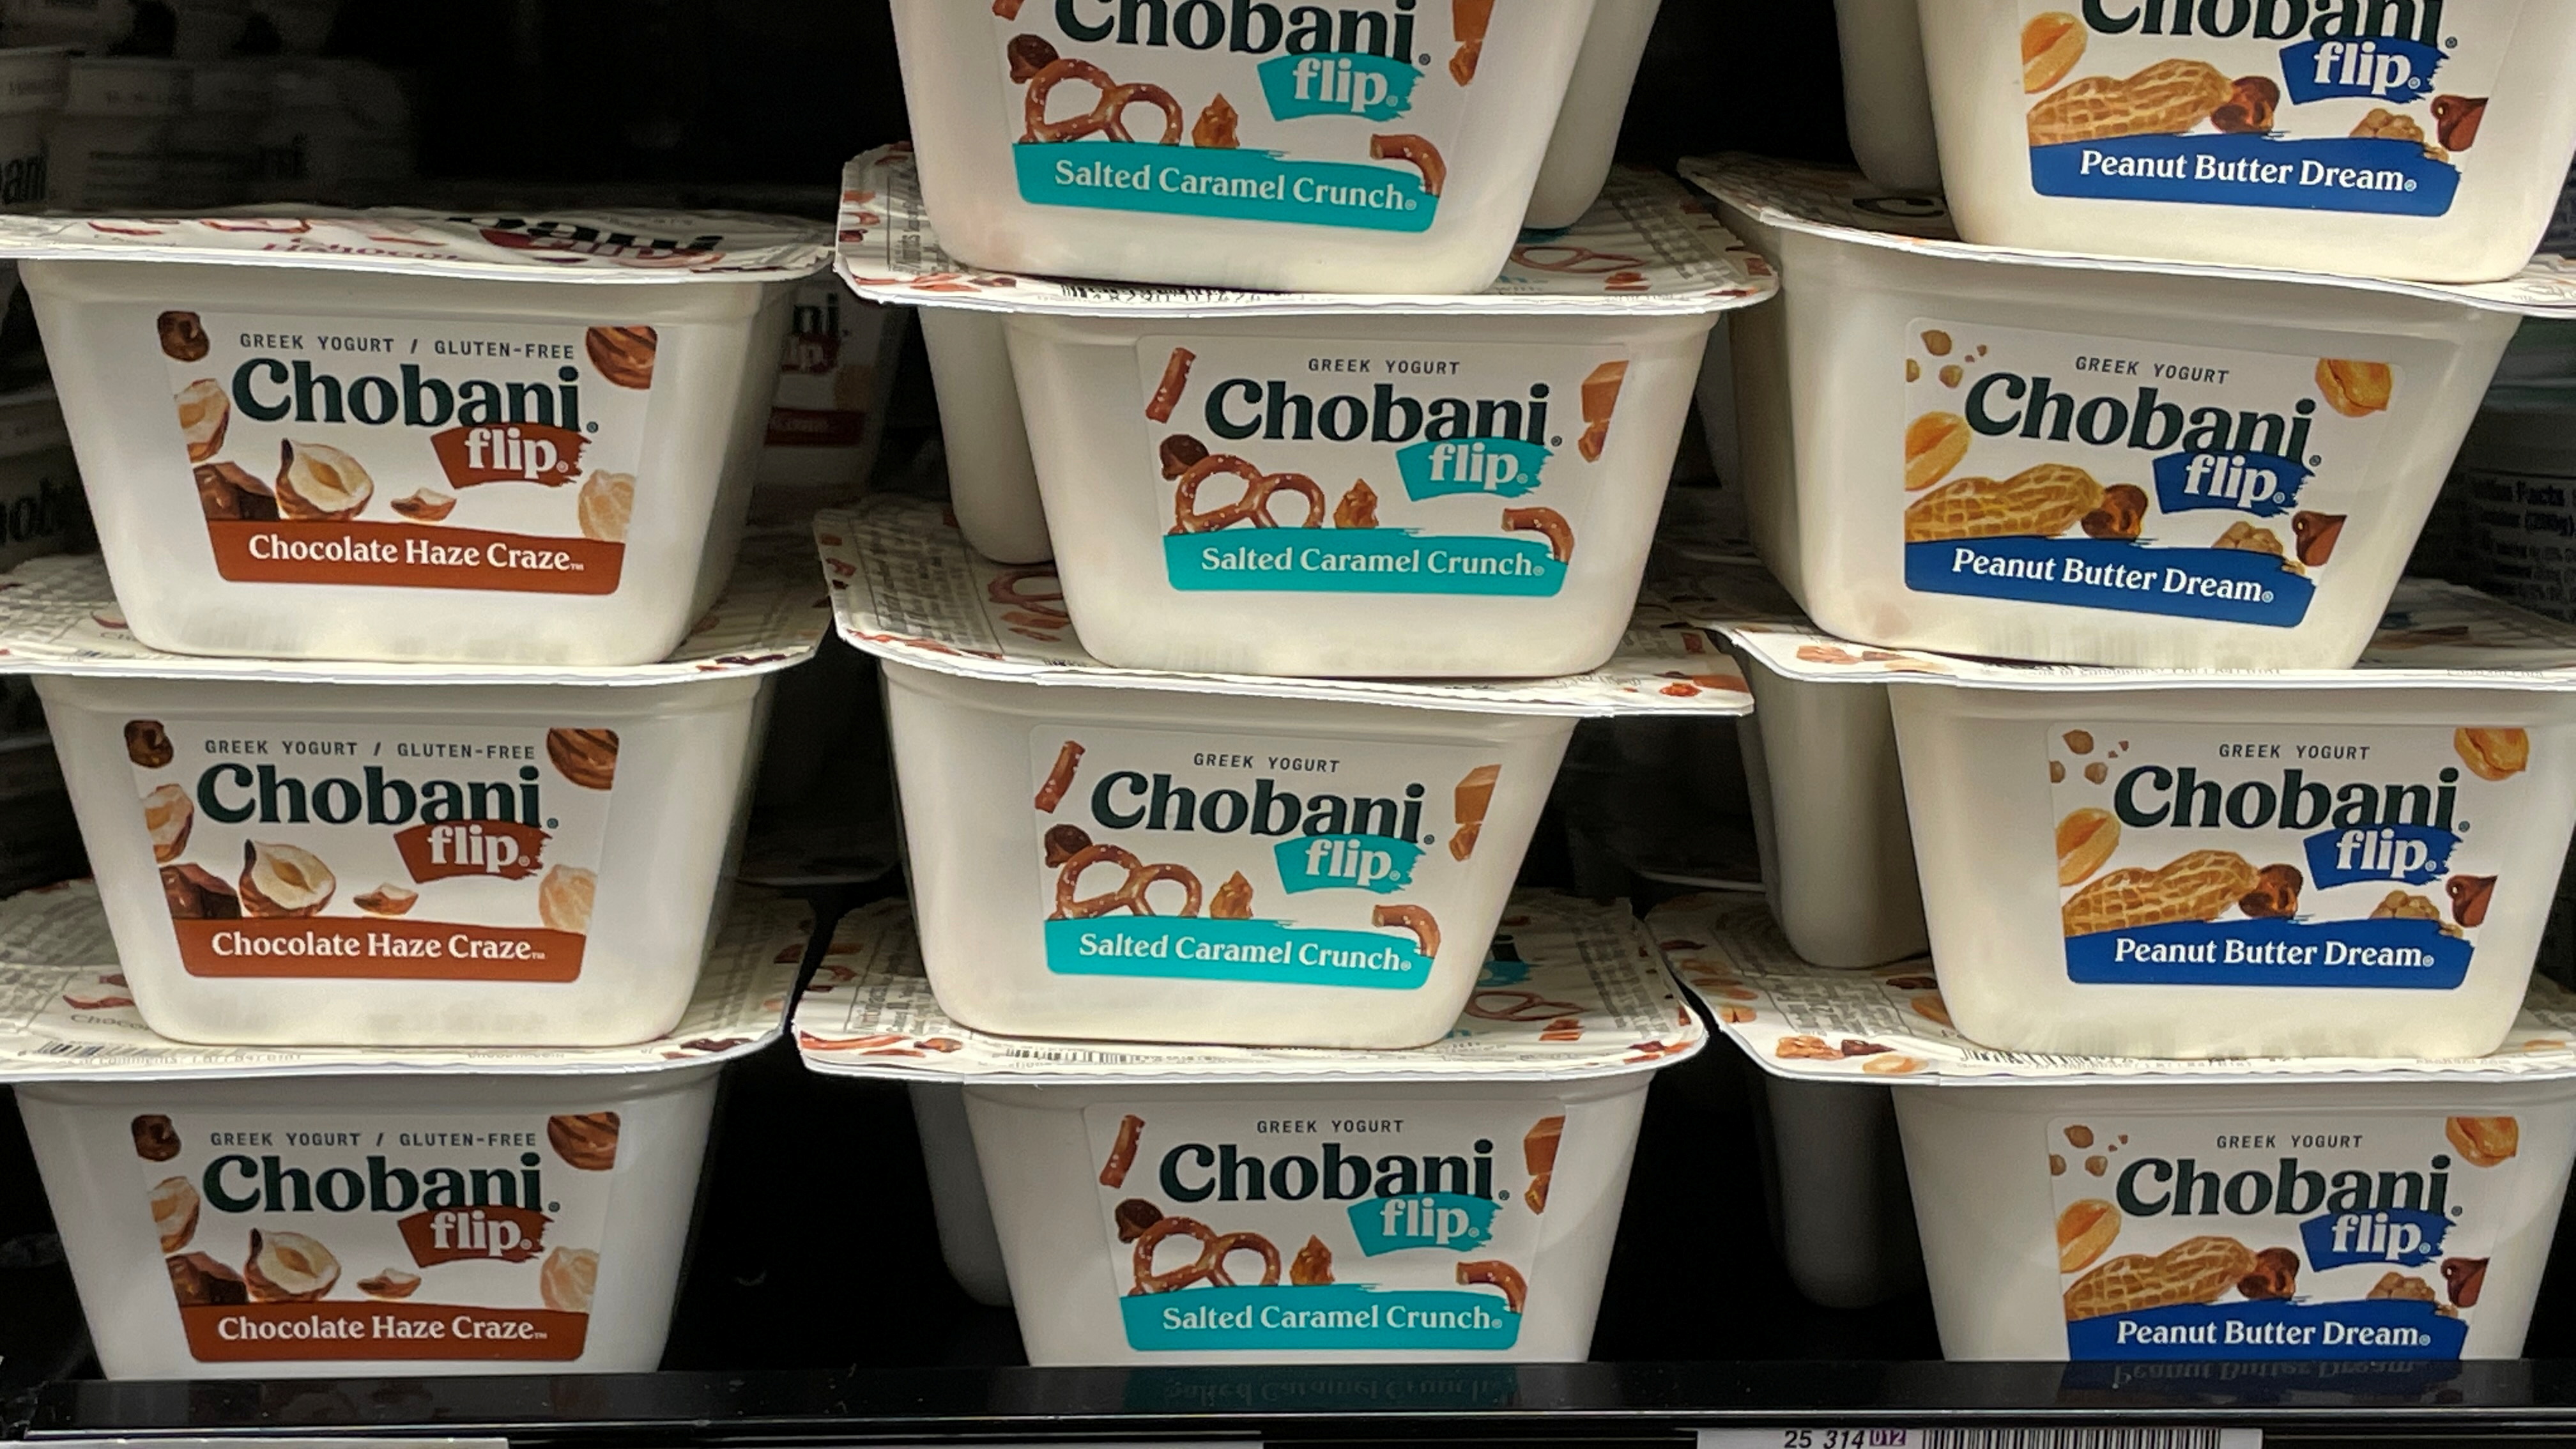 Greek-yogurt maker Chobani is shown for sale in a California grocery store